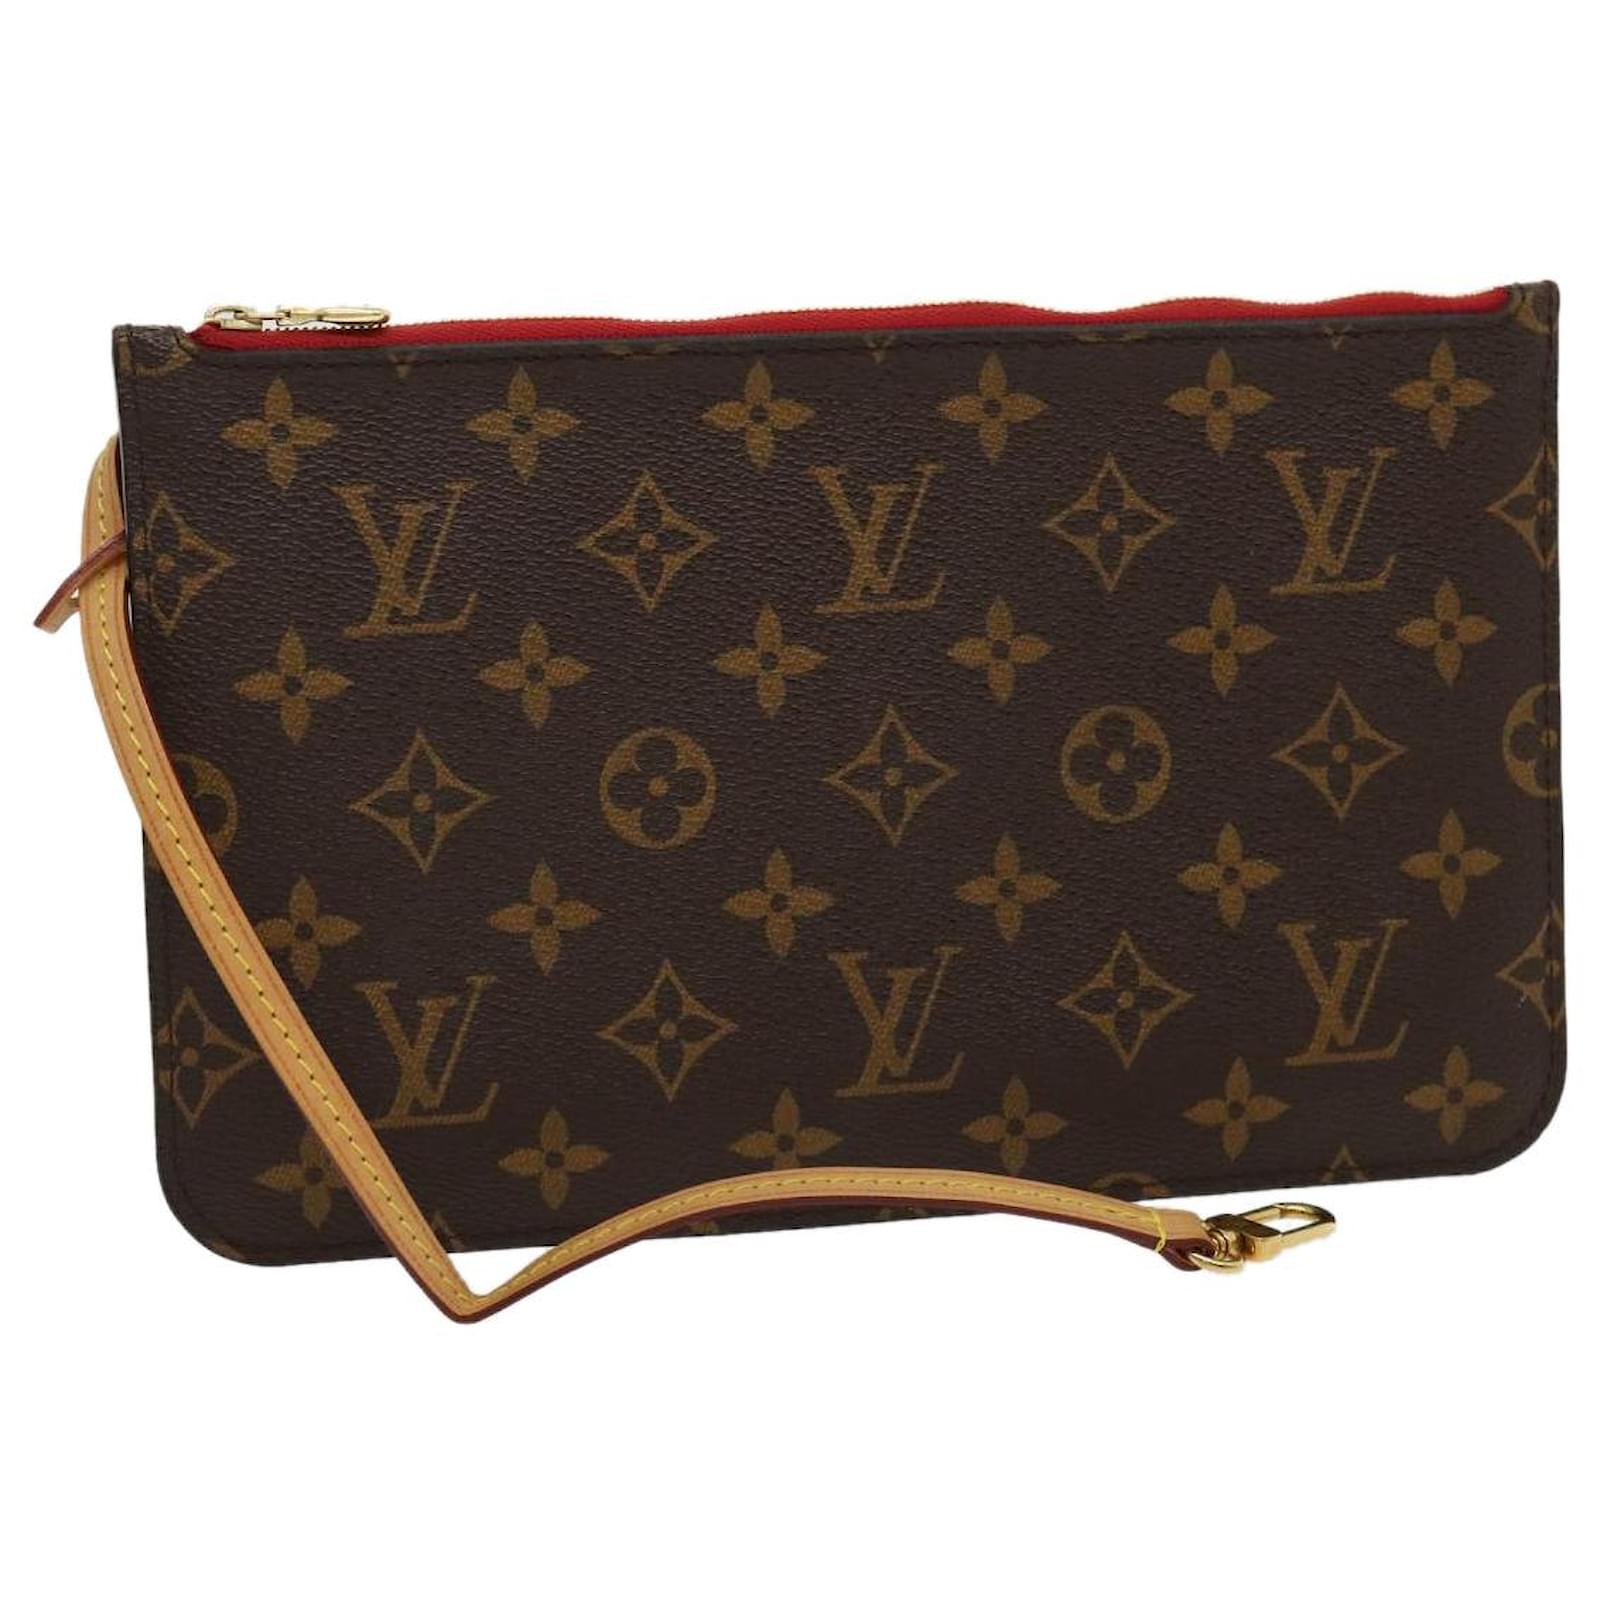  Louis Vuitton Bag M40995 LOUIS VUITTON Monogram LV